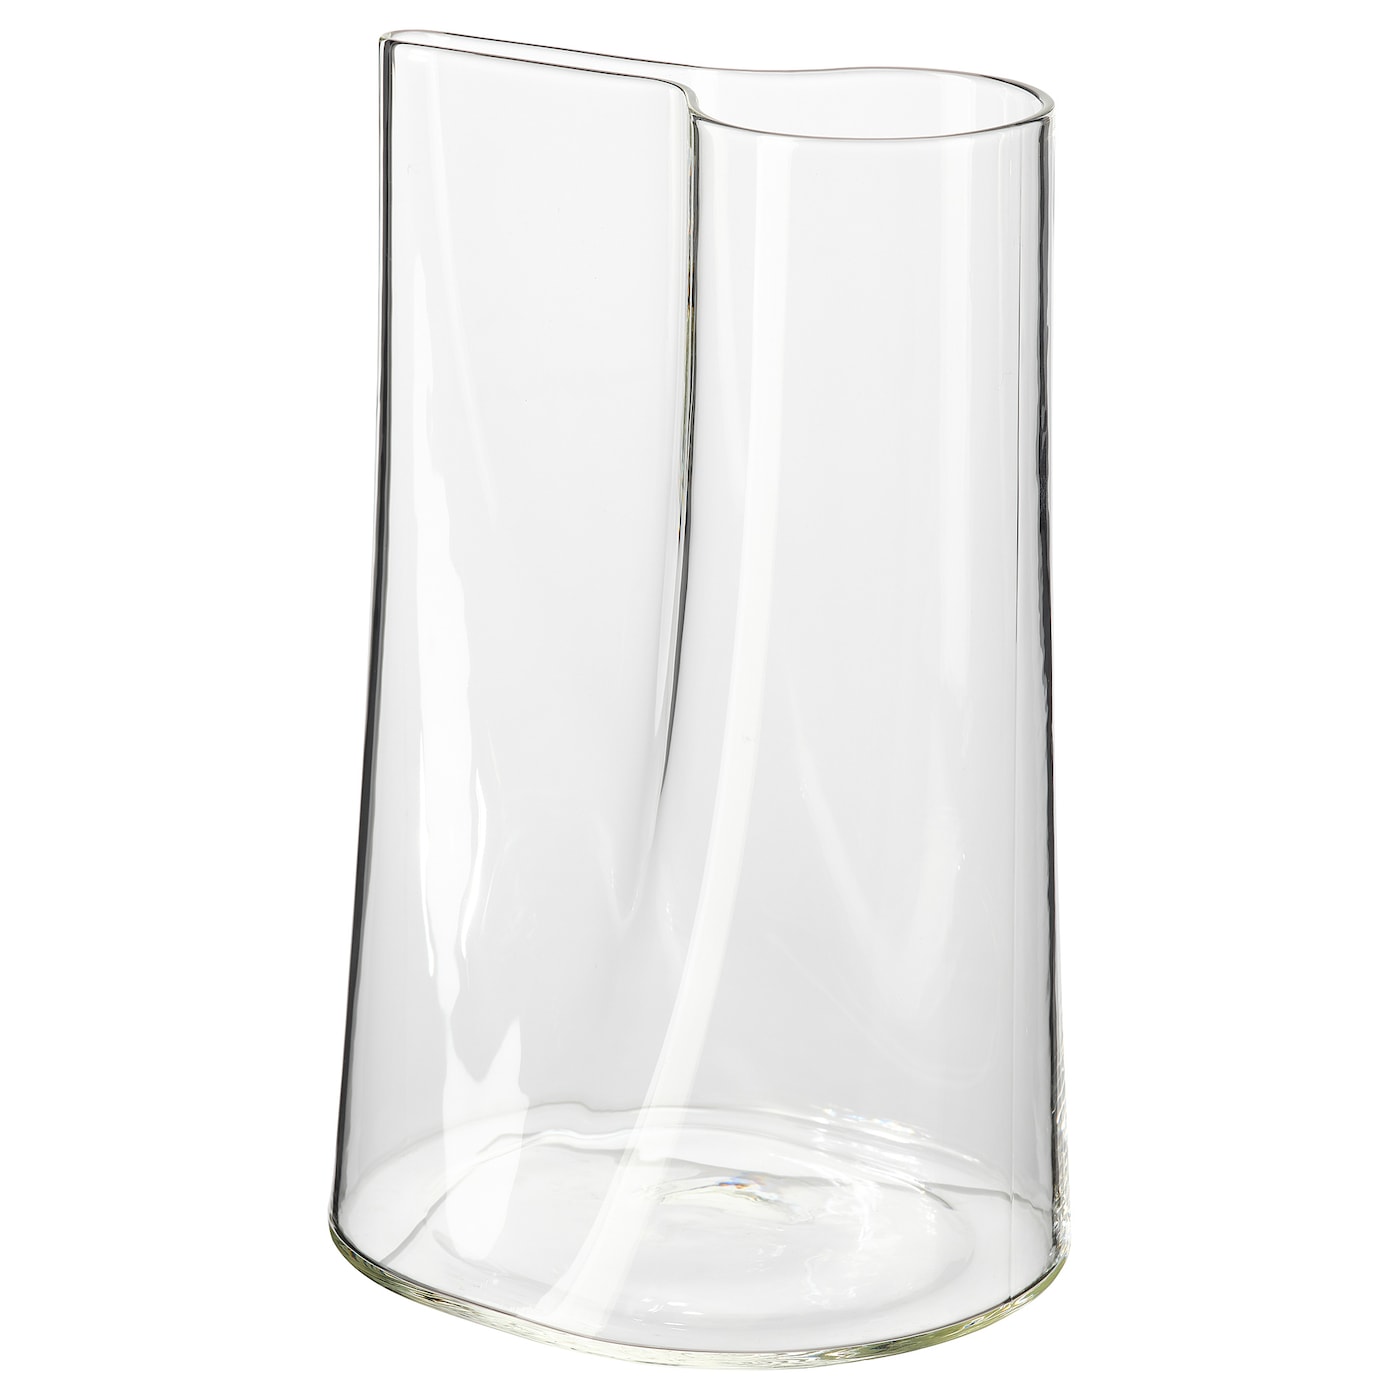 CHILIFRUKT ЧИЛИФРУКТ Ваза/лейка, прозрачное стекло, 21 см IKEA ваза для цветов грация сердце